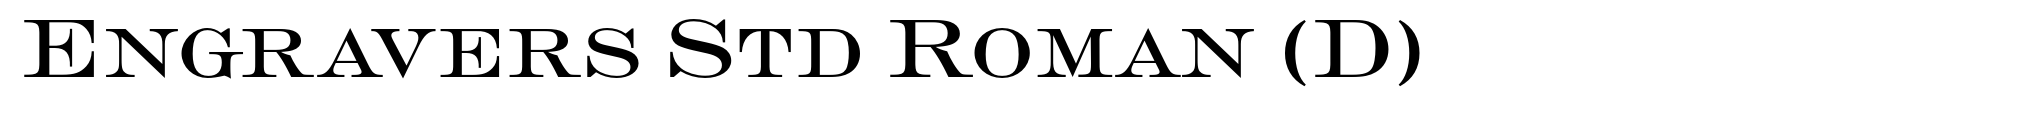 Engravers Std Roman (D) image